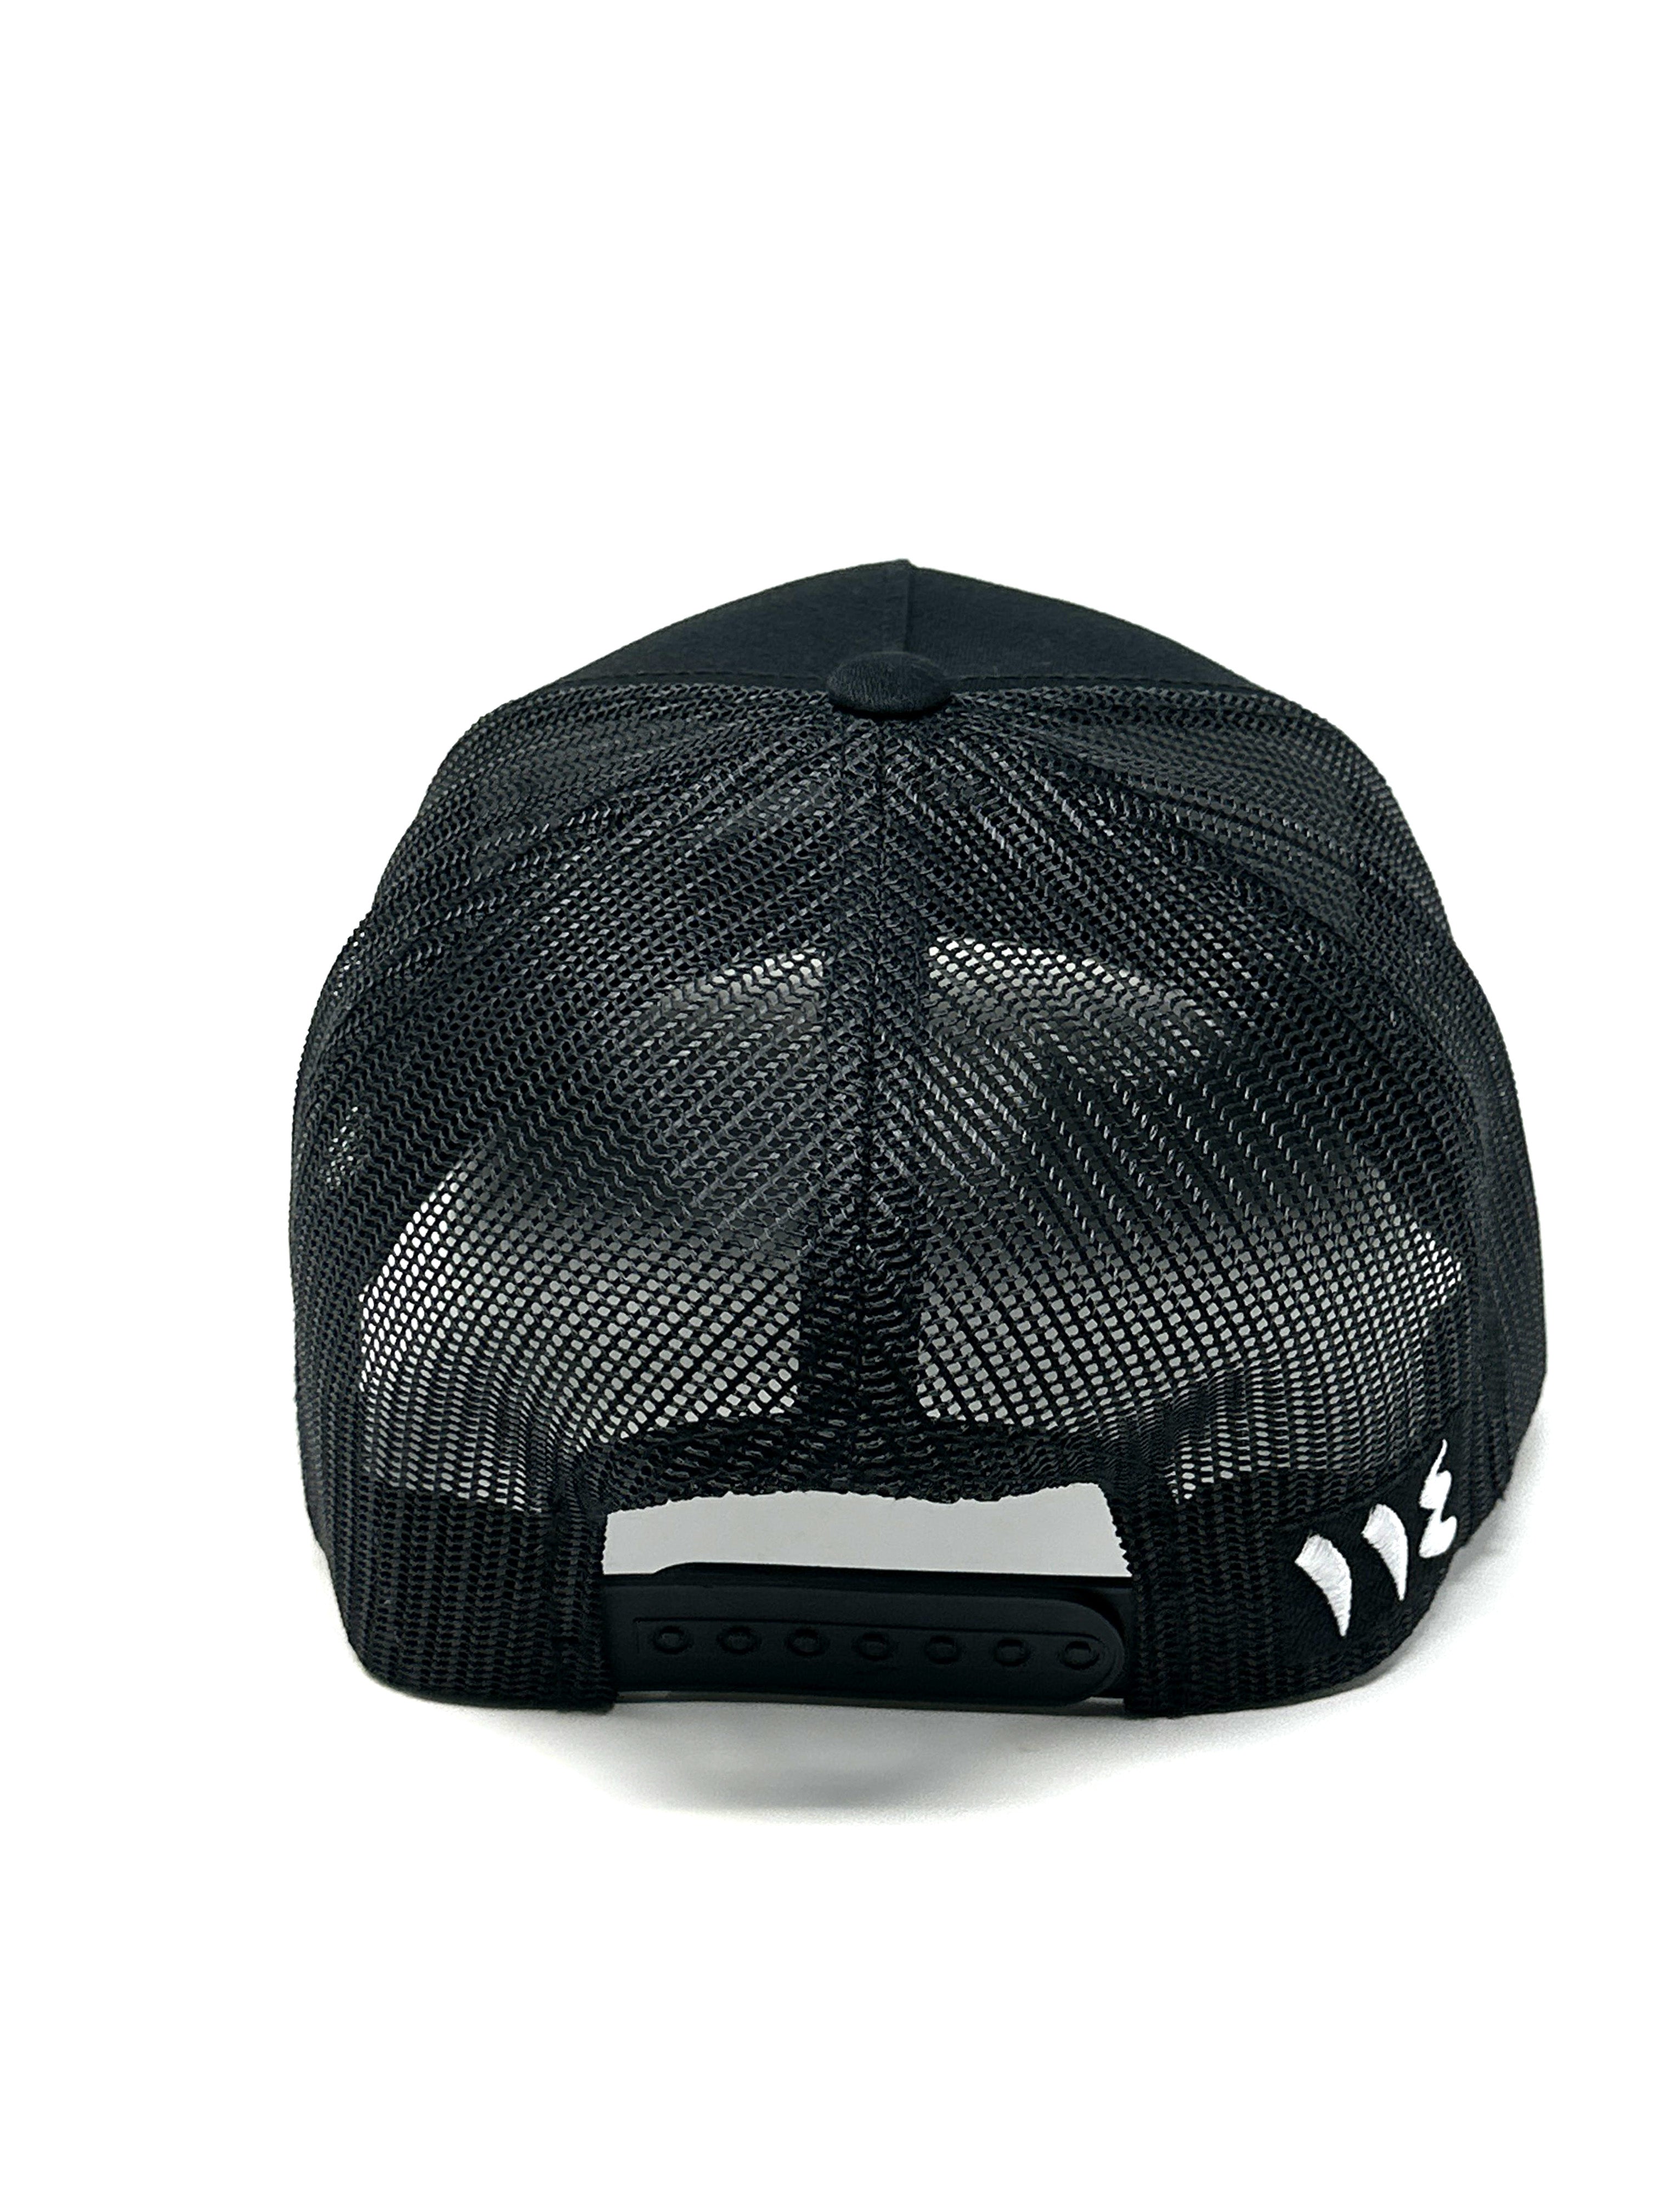 Doha Black Rubber Patch Cap - One fourteen apparel